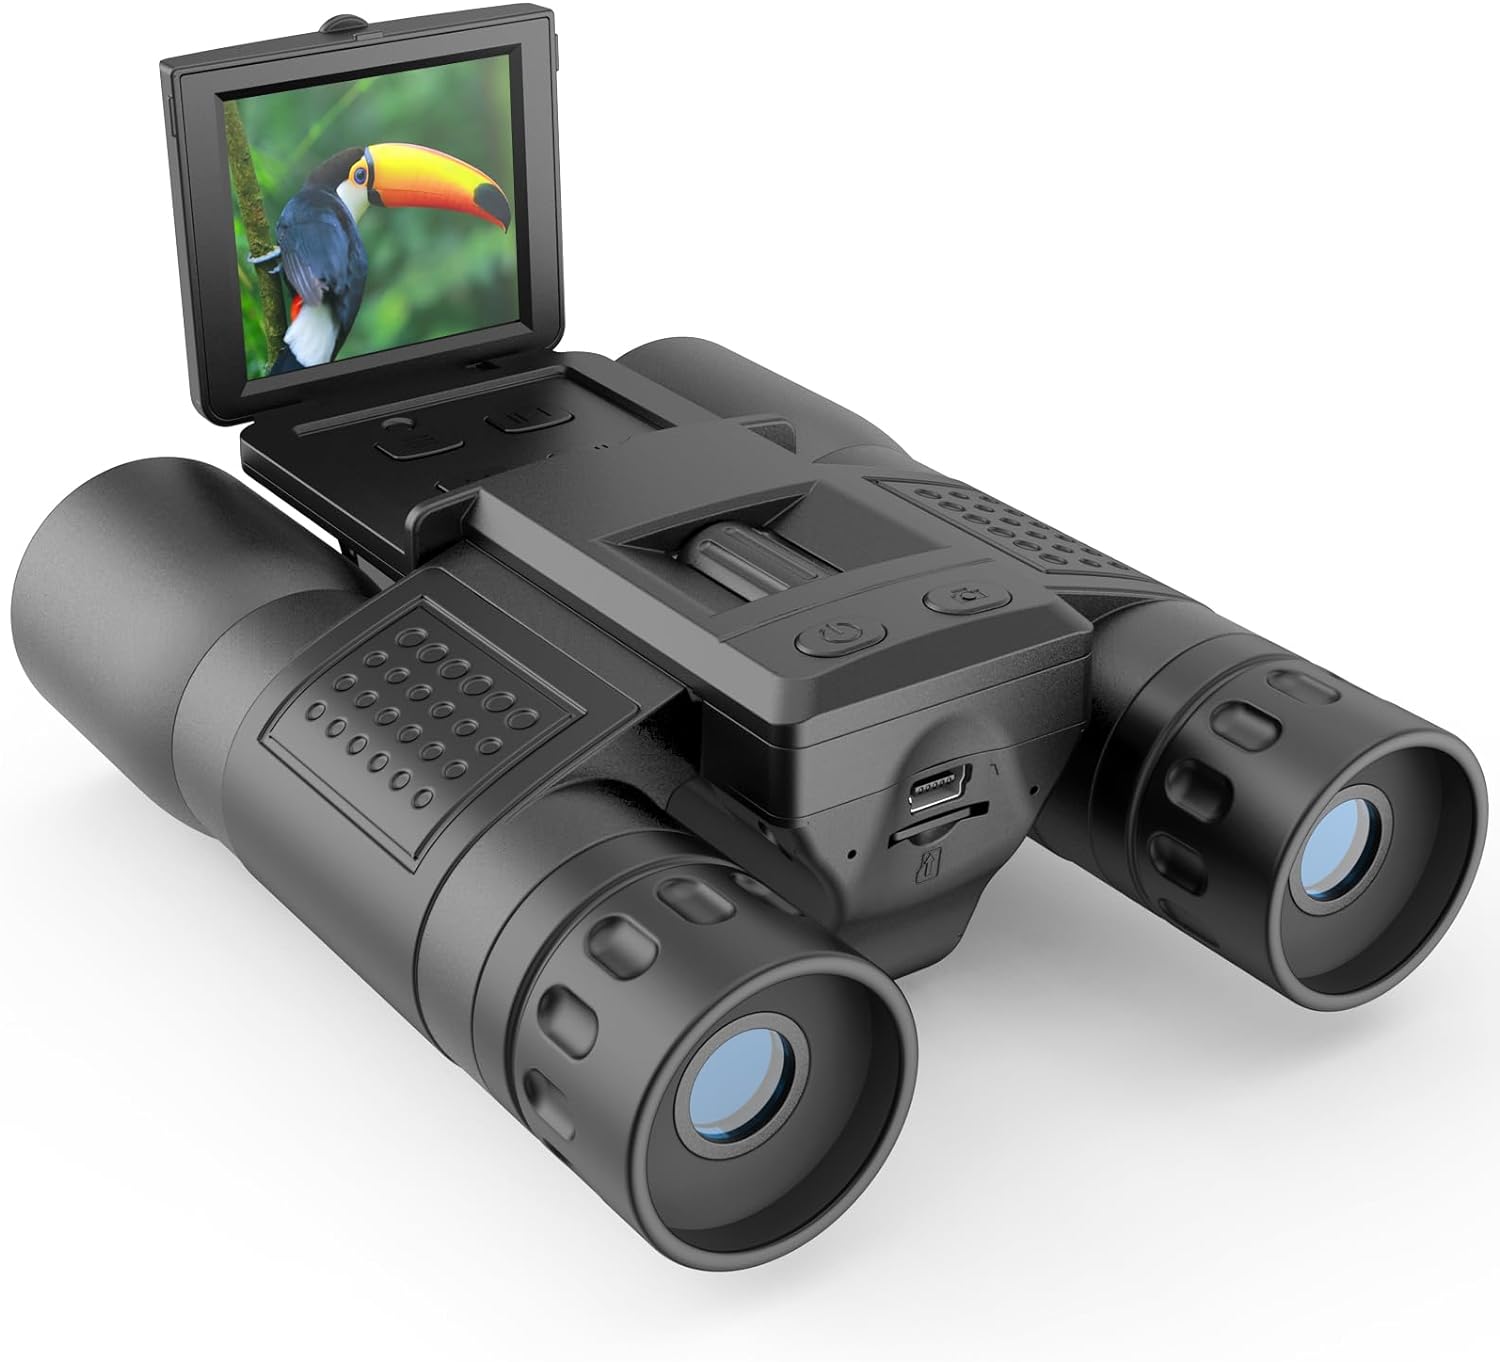 12x32 Binoculars for Adults, Binoculars with Camera, 2 LTPS Display 5MP 1080P Video Photo Recorder with 32GB Micro SD Card, High Powered Binoculars for Bird Watching Travel Hunting, Black